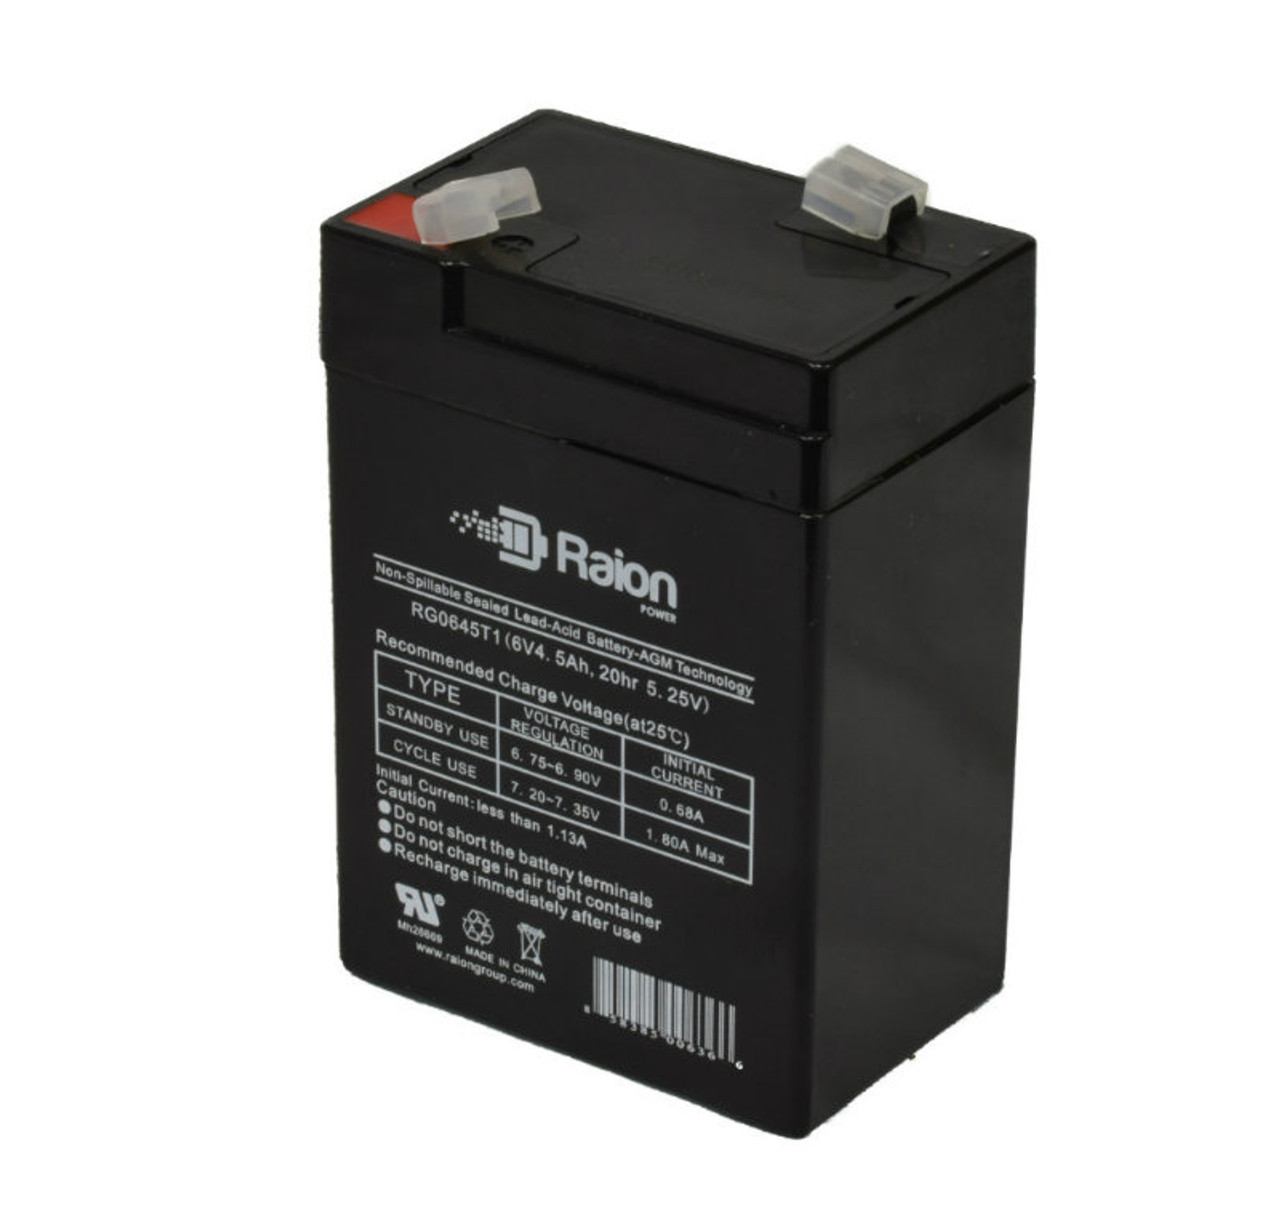 Raion Power RG0645T1 6V 4.5Ah Replacement Battery Cartridge for Douglas DG64